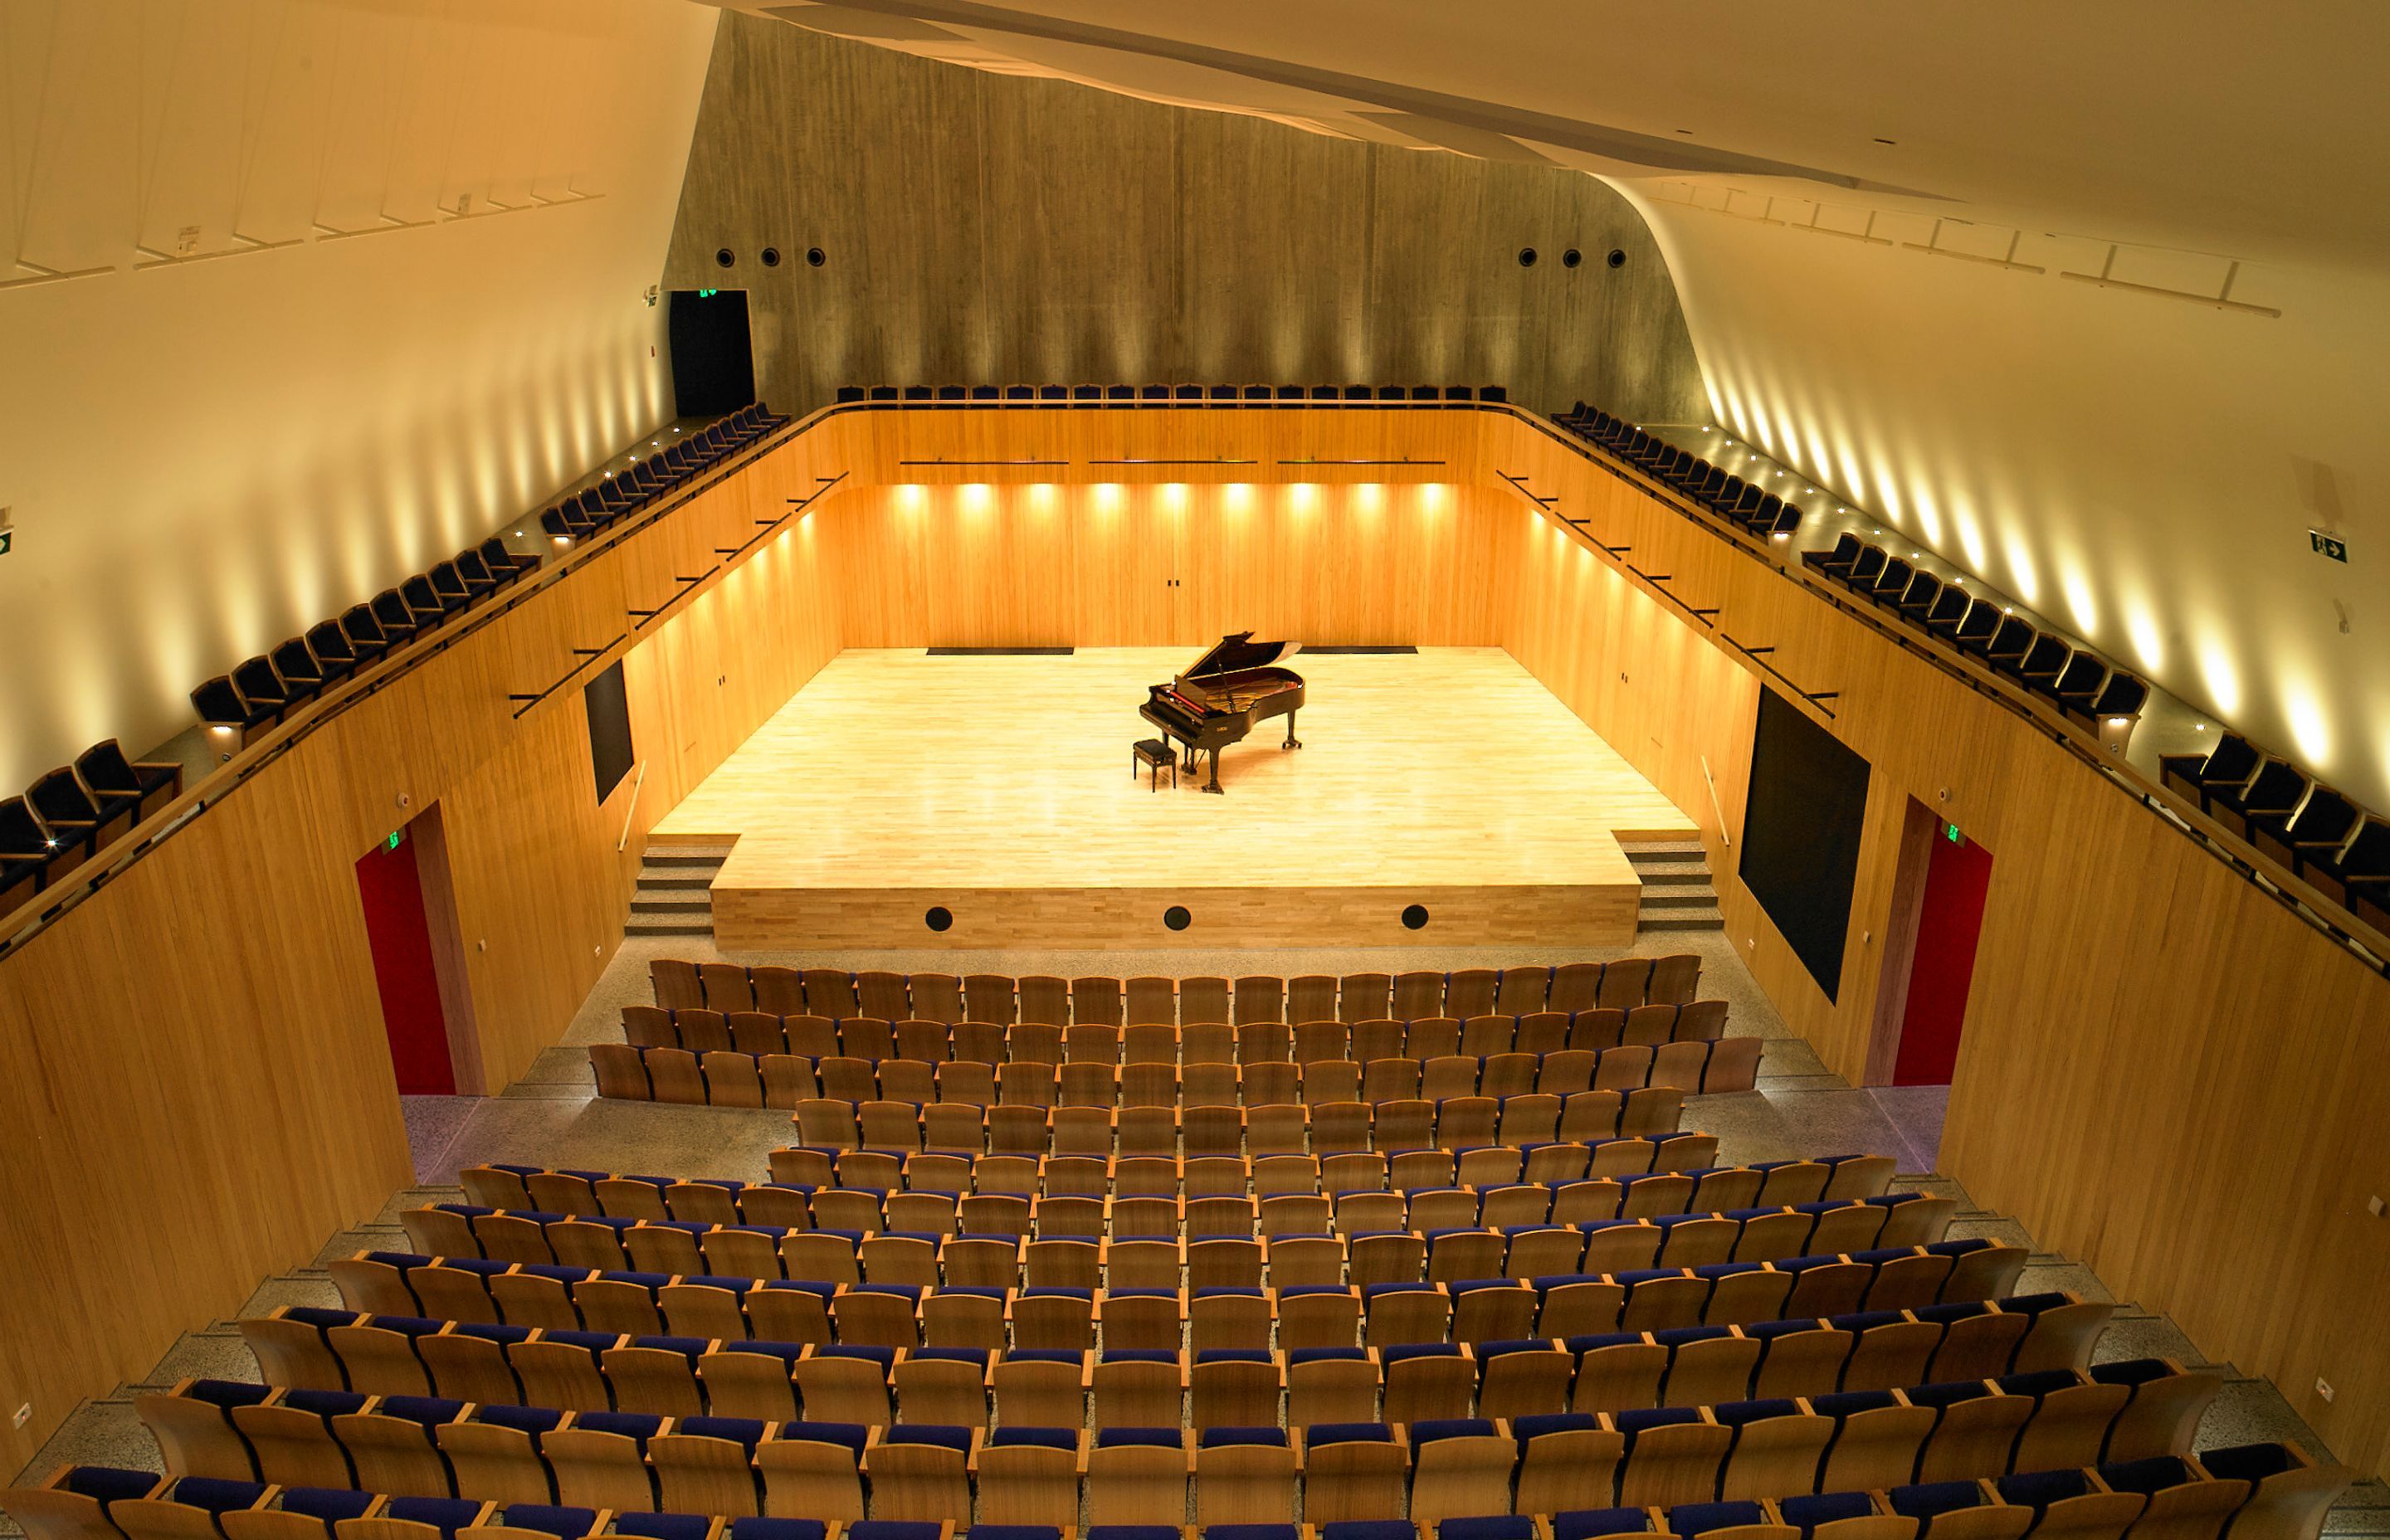 Blyth Performing Arts Centre